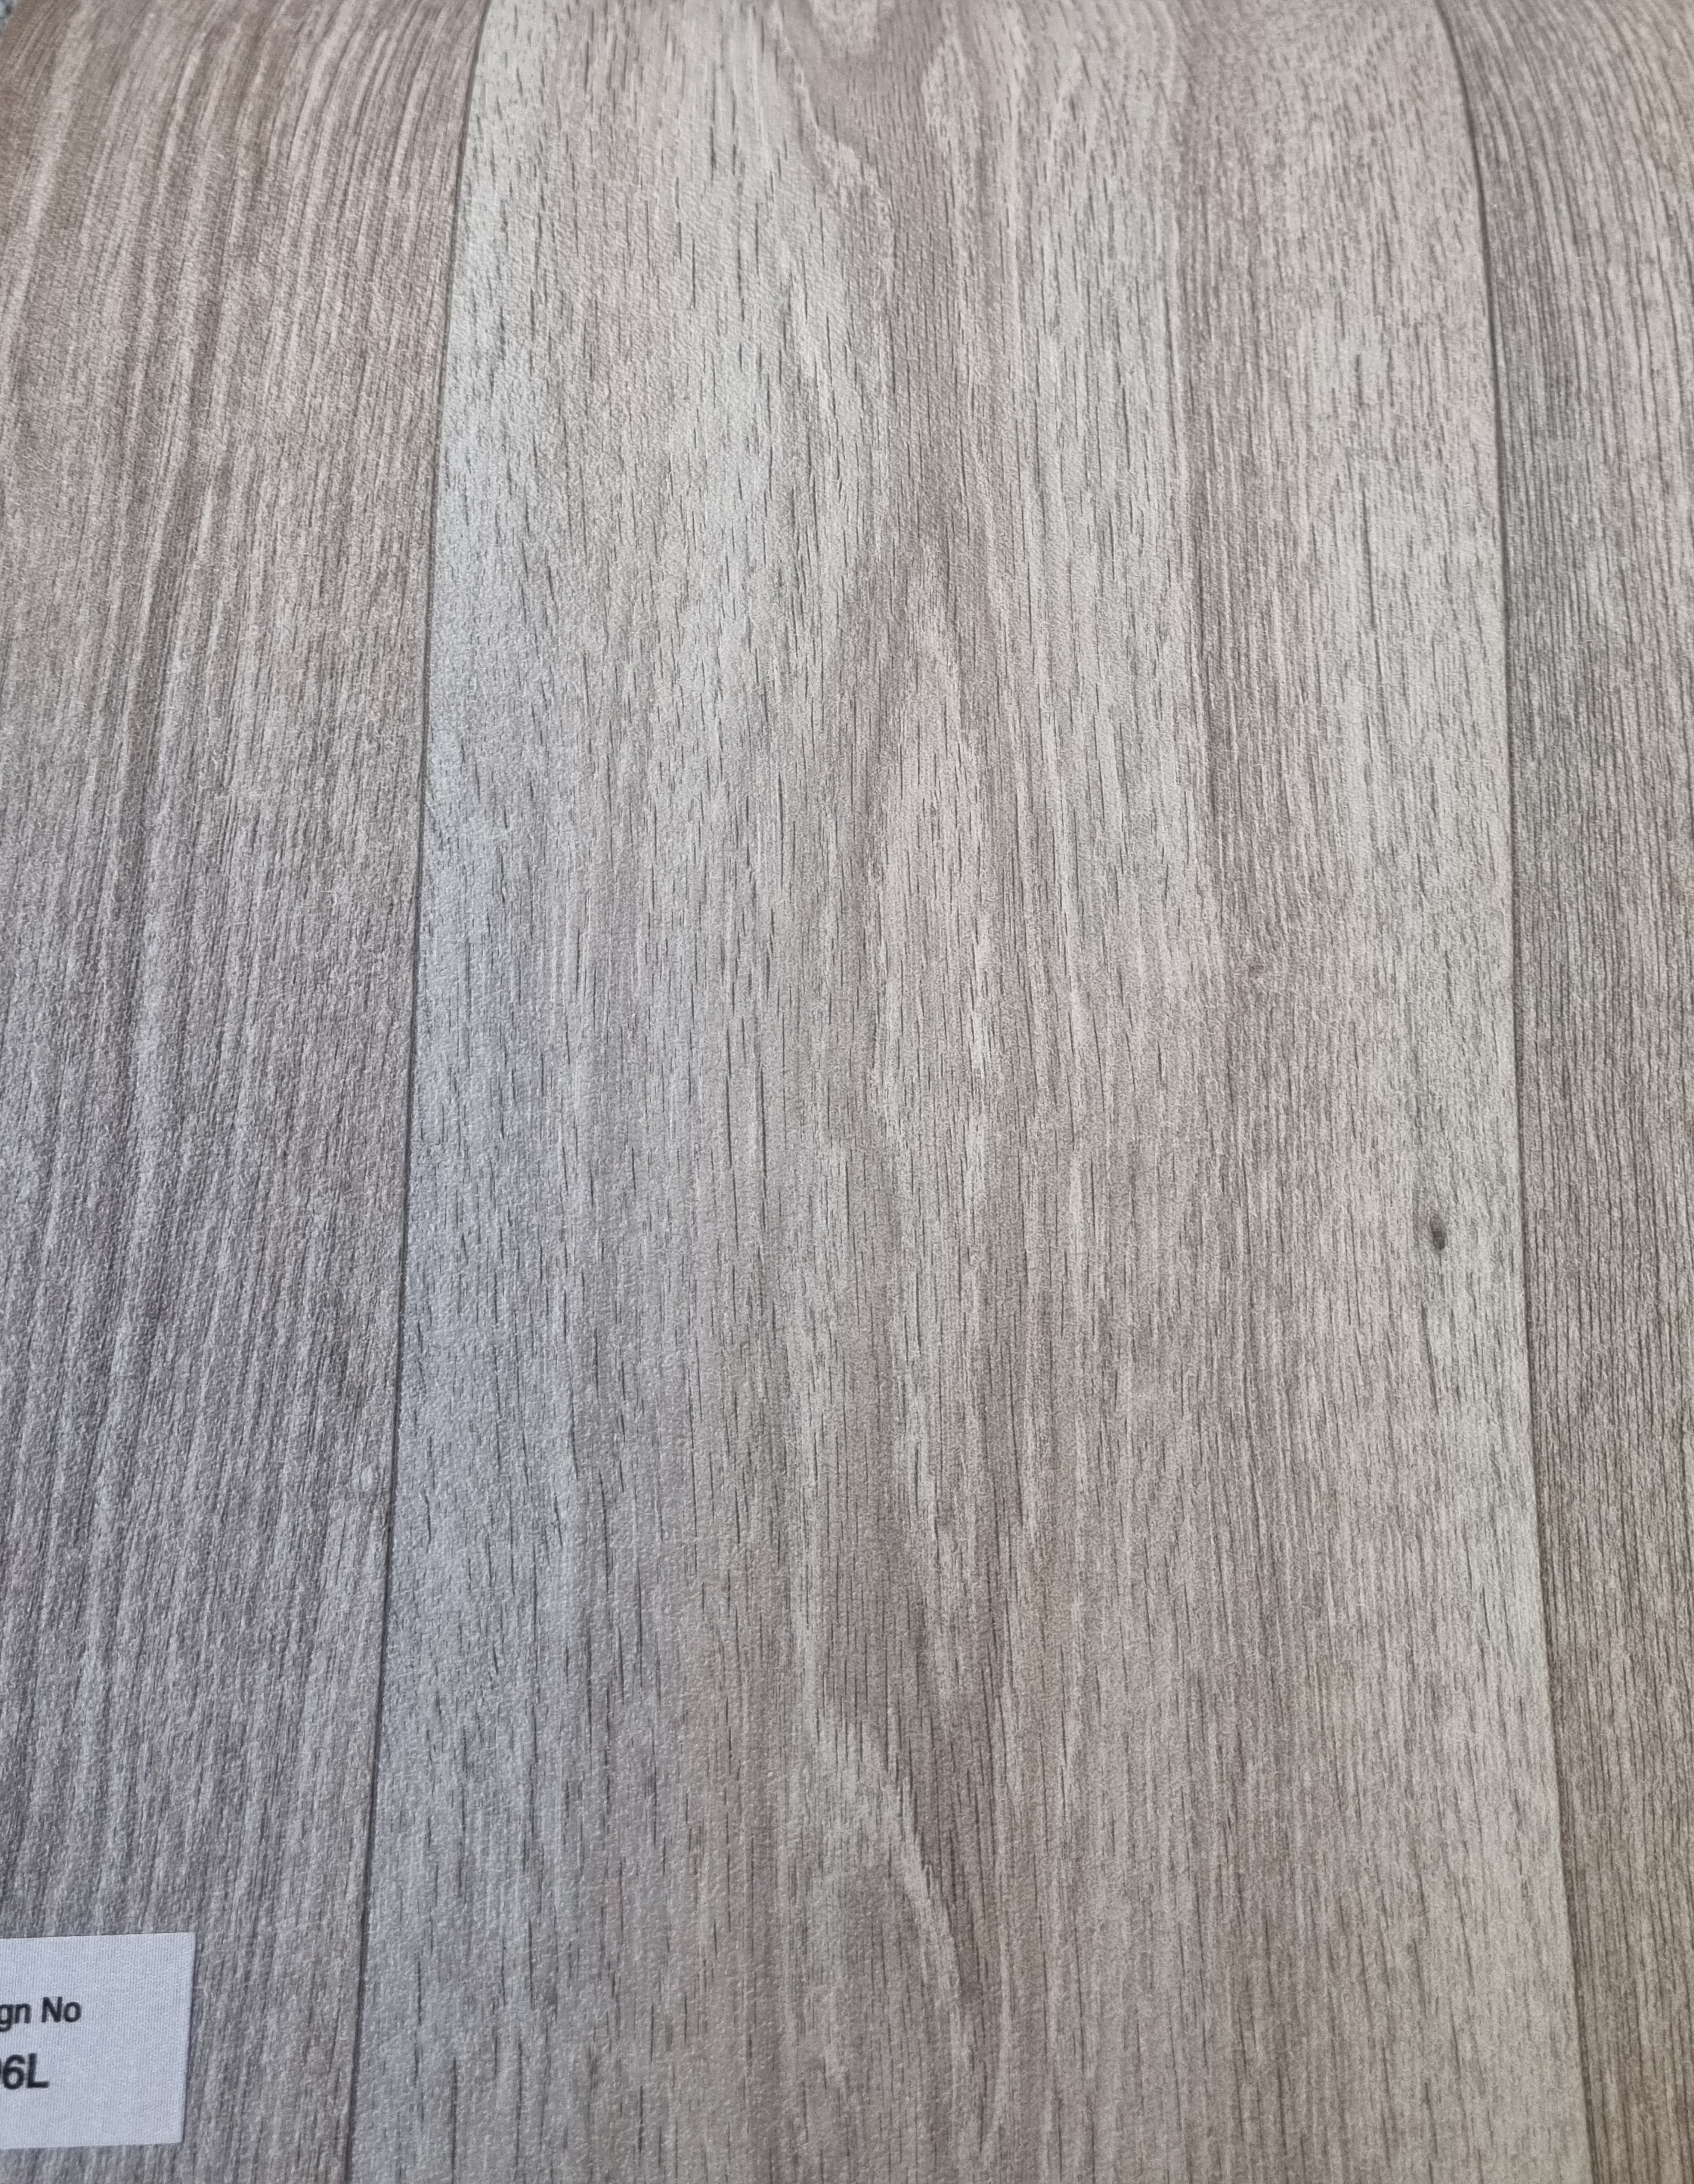 Quintex vinyl flooring